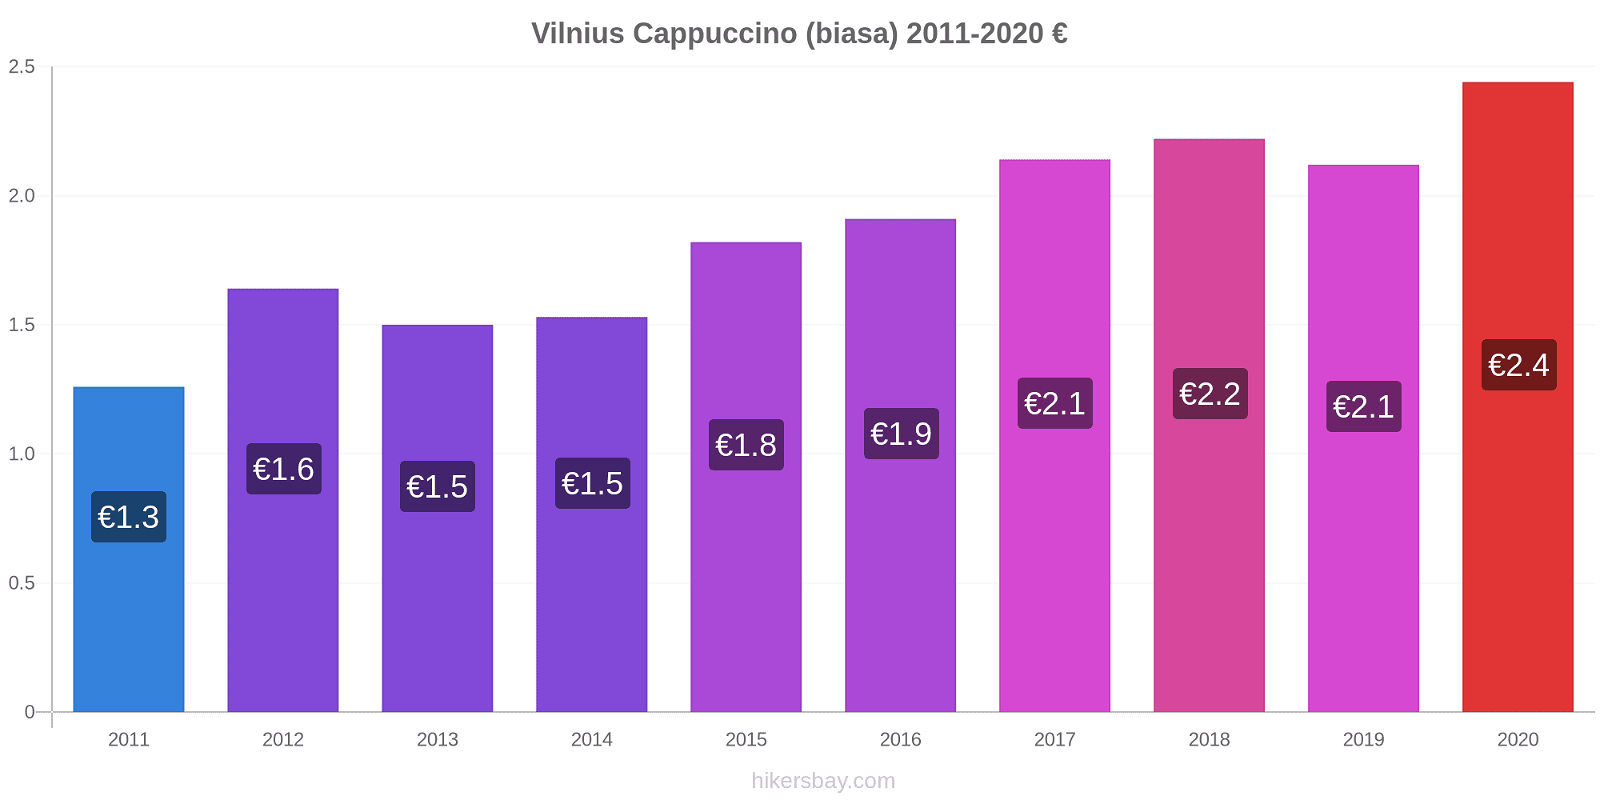 Vilnius perubahan harga Cappuccino (biasa) hikersbay.com